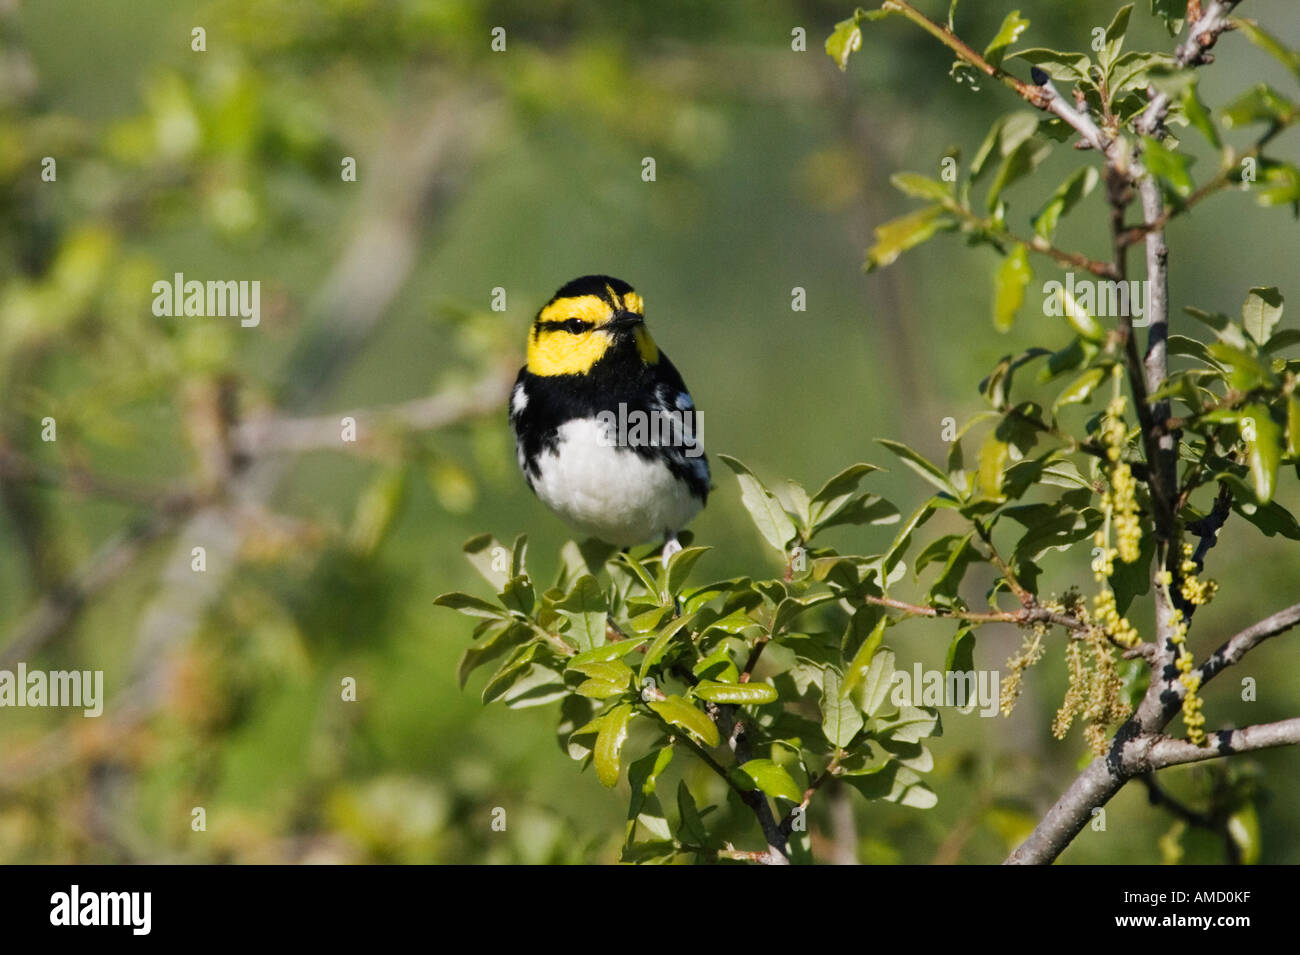 Golden-cheeked Warbler in Tree Stock Photo